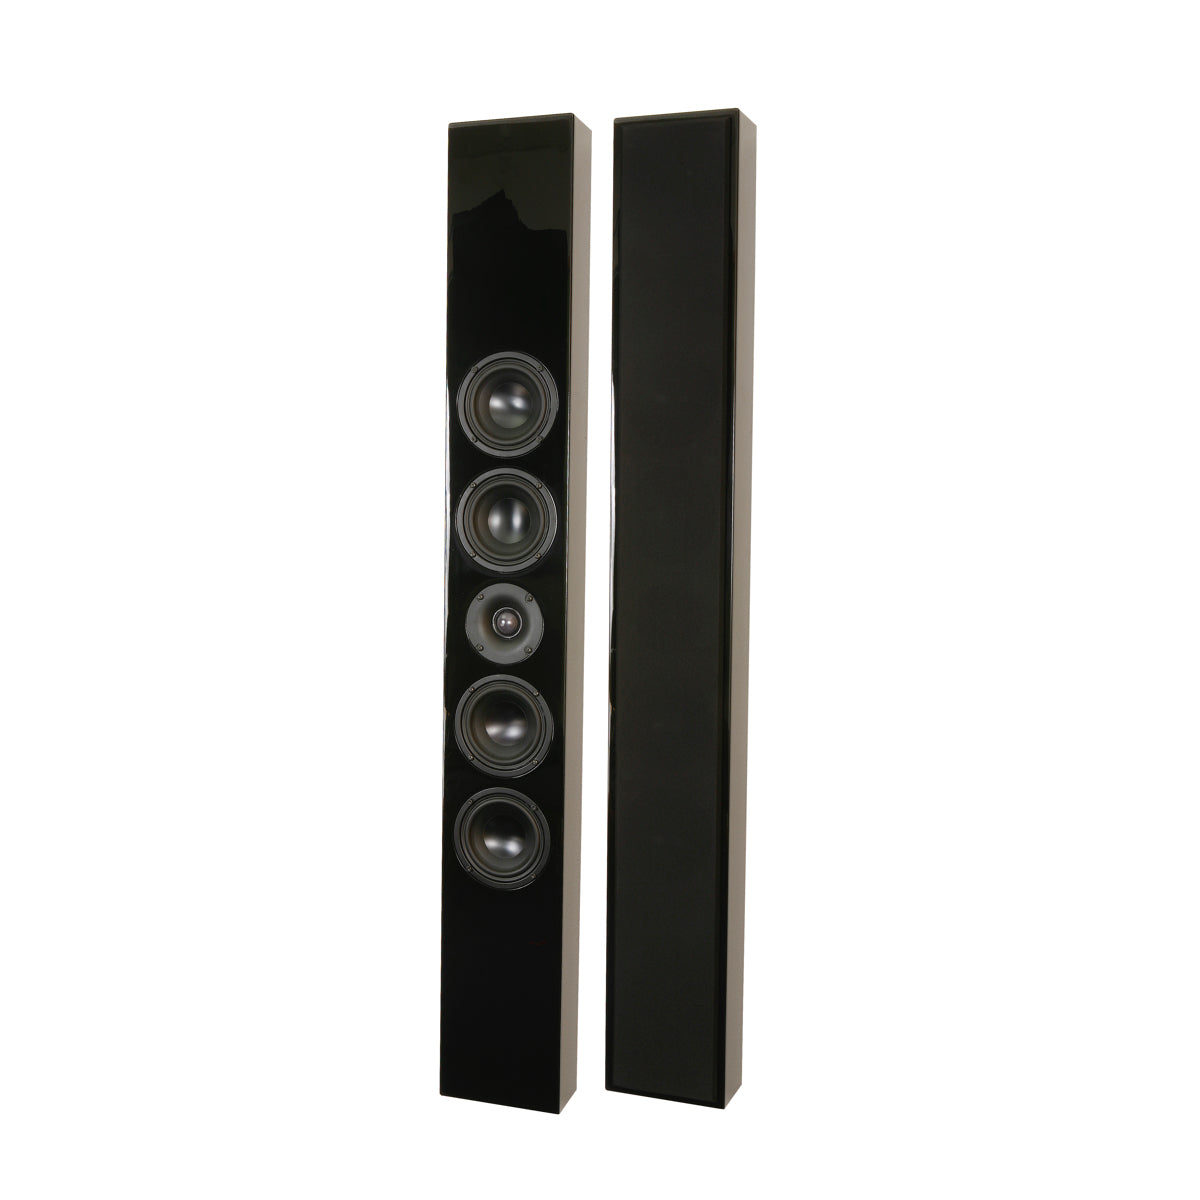 DLS Flatbox Slim Large XL On wall speaker - Pair - AVStore